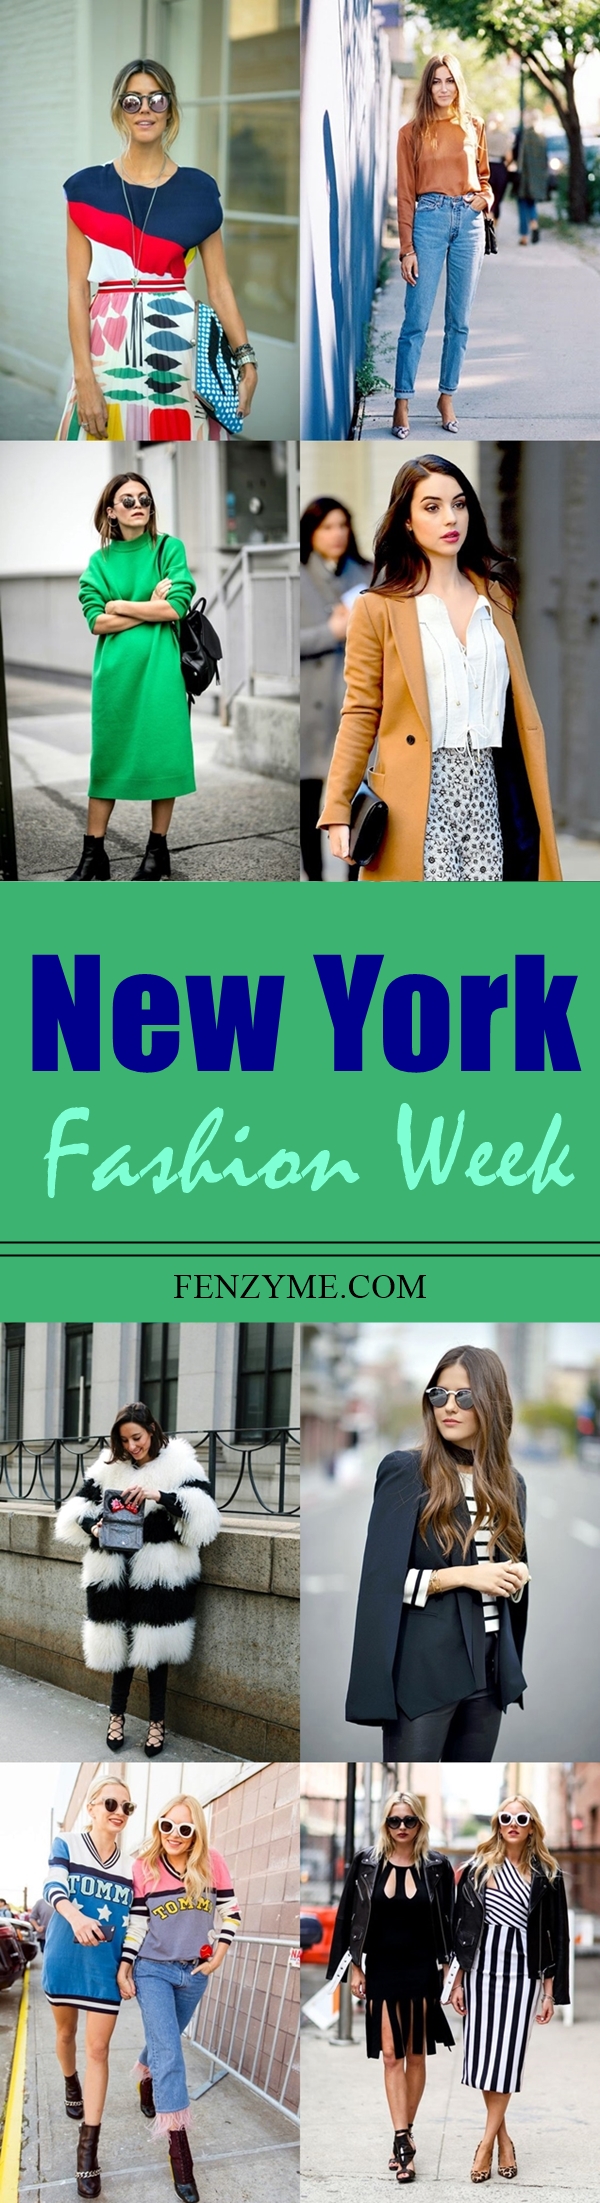 new-york-fashion-week-1-tile